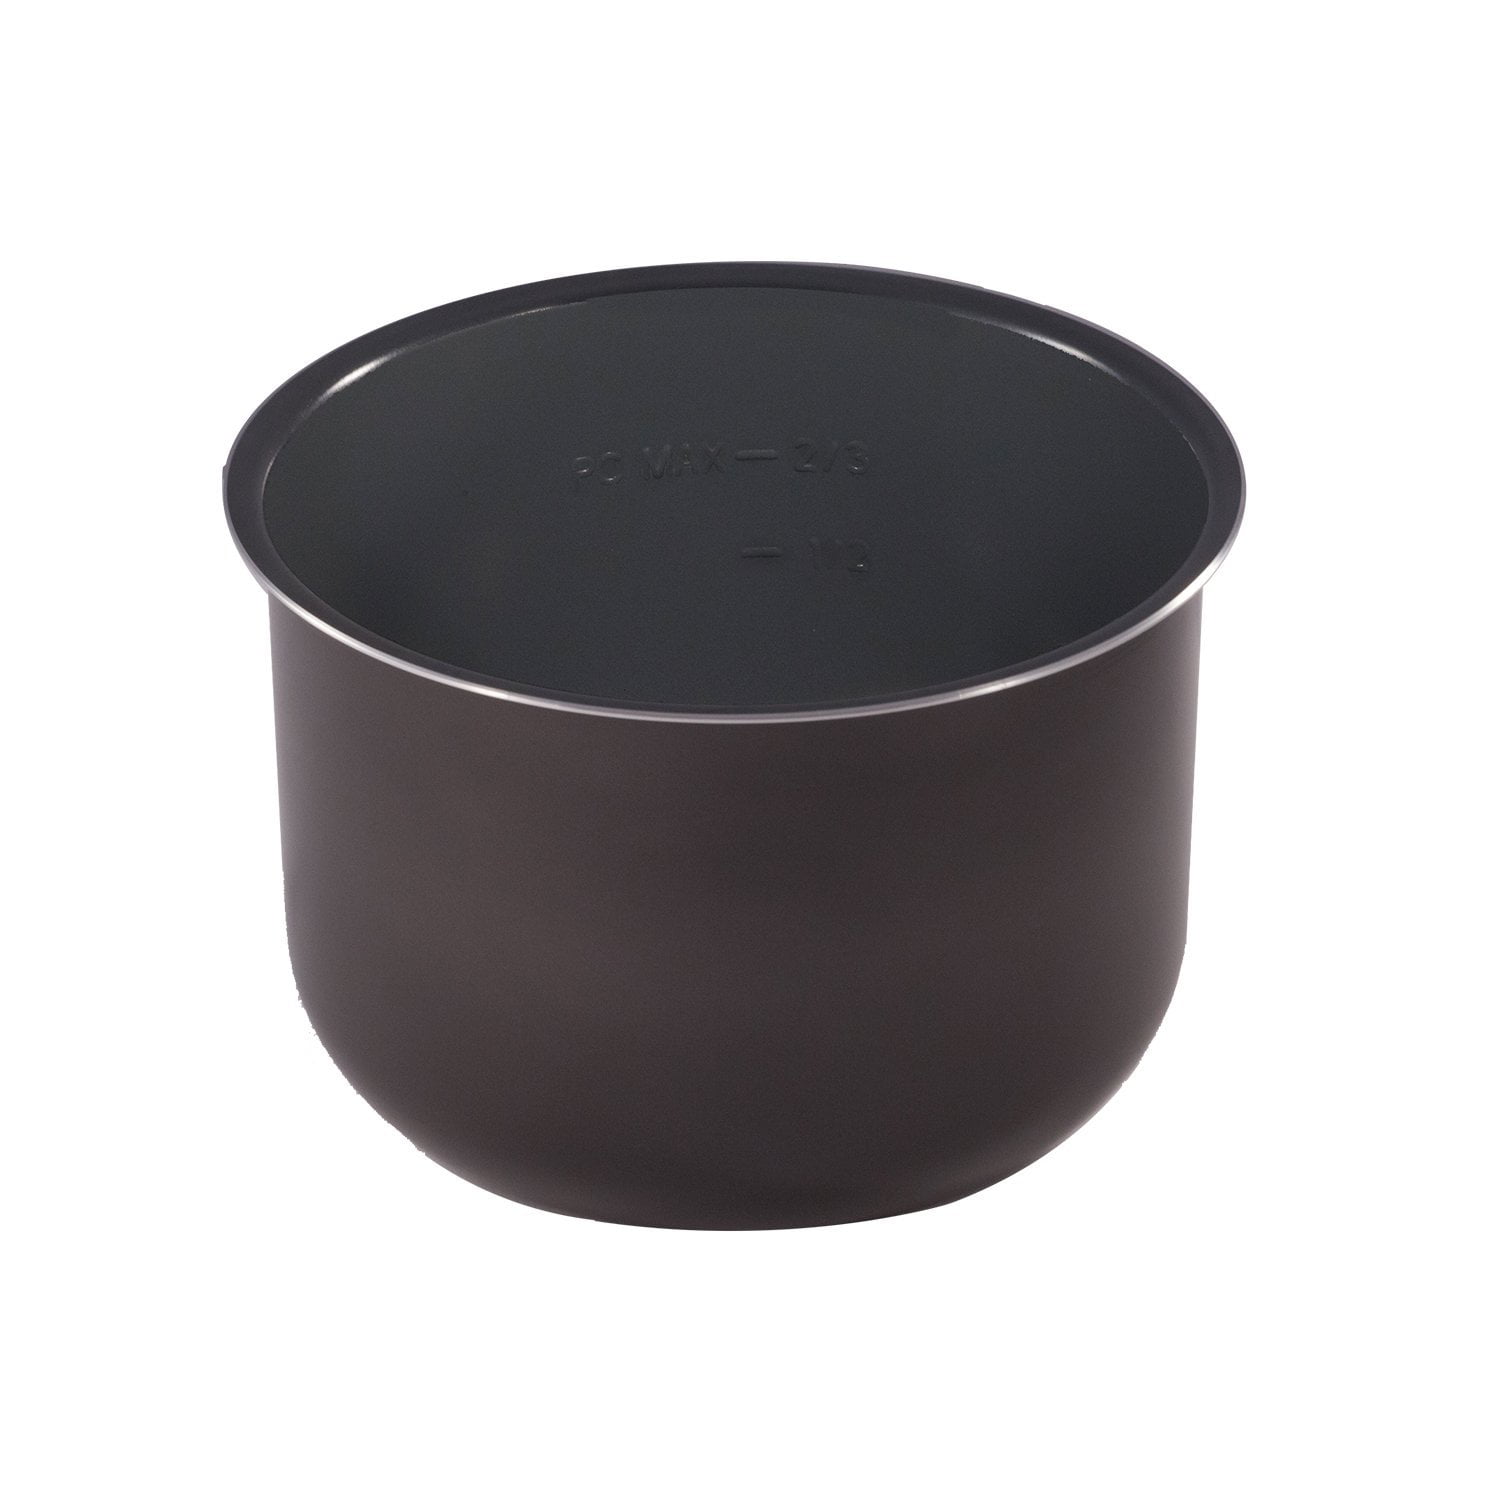 Instant Pot Ceramic Inner Cooking Pot - 6 Quart & Sealing Rings 2-Pack  Red/Blue, 6 Quart